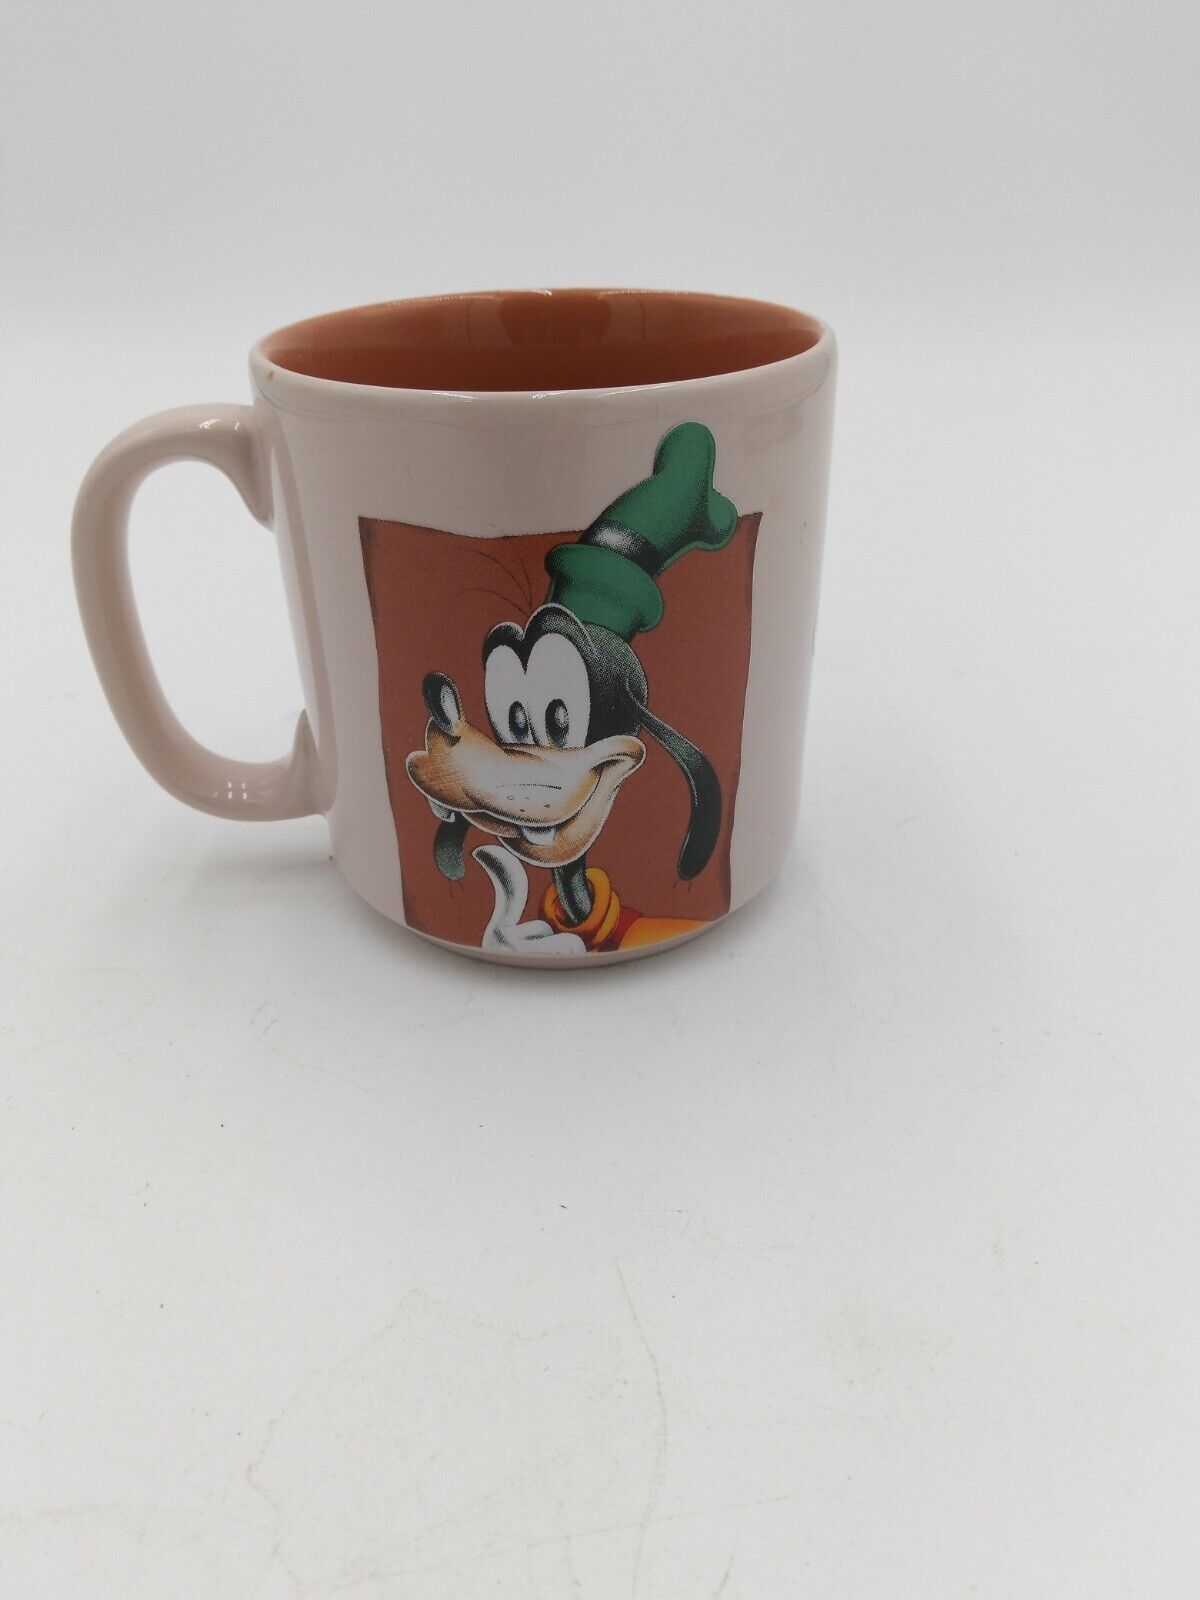 Vintage Rare The Disney Store Exclusive Goofy Coffee Mug Brown Tan